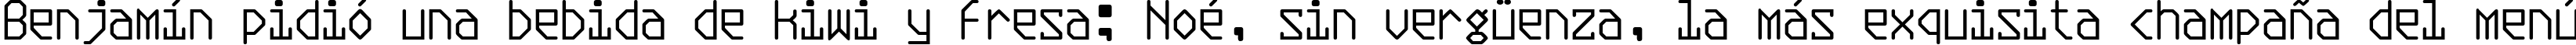 Пример написания шрифтом Plasmatic текста на испанском